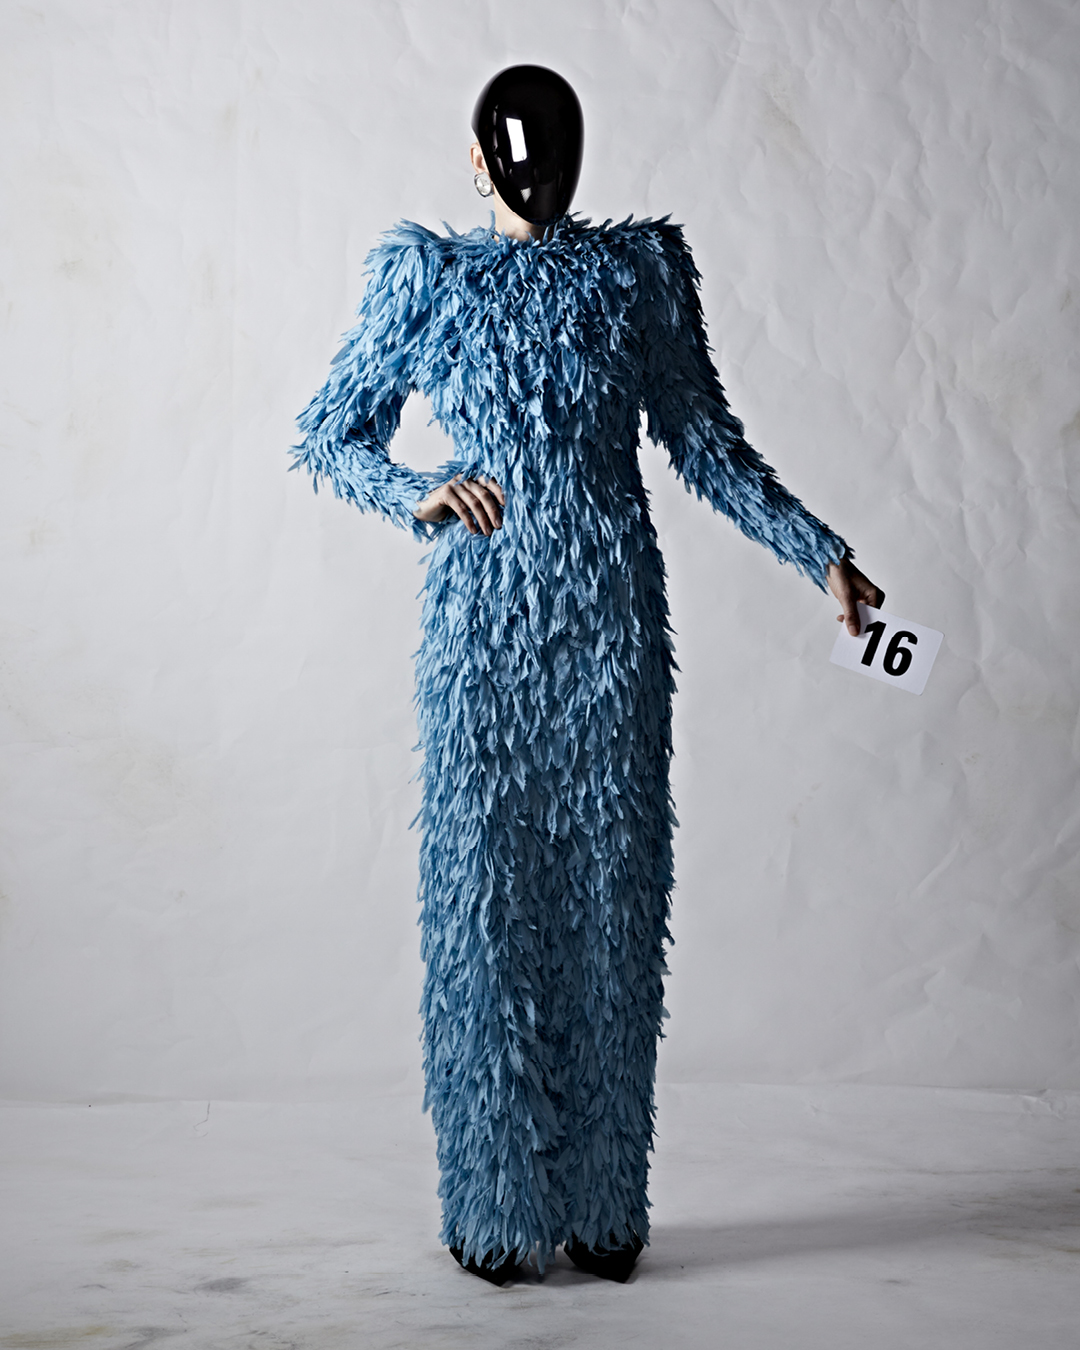 Balenciaga: 'the master' of couture's sculptural garments – in